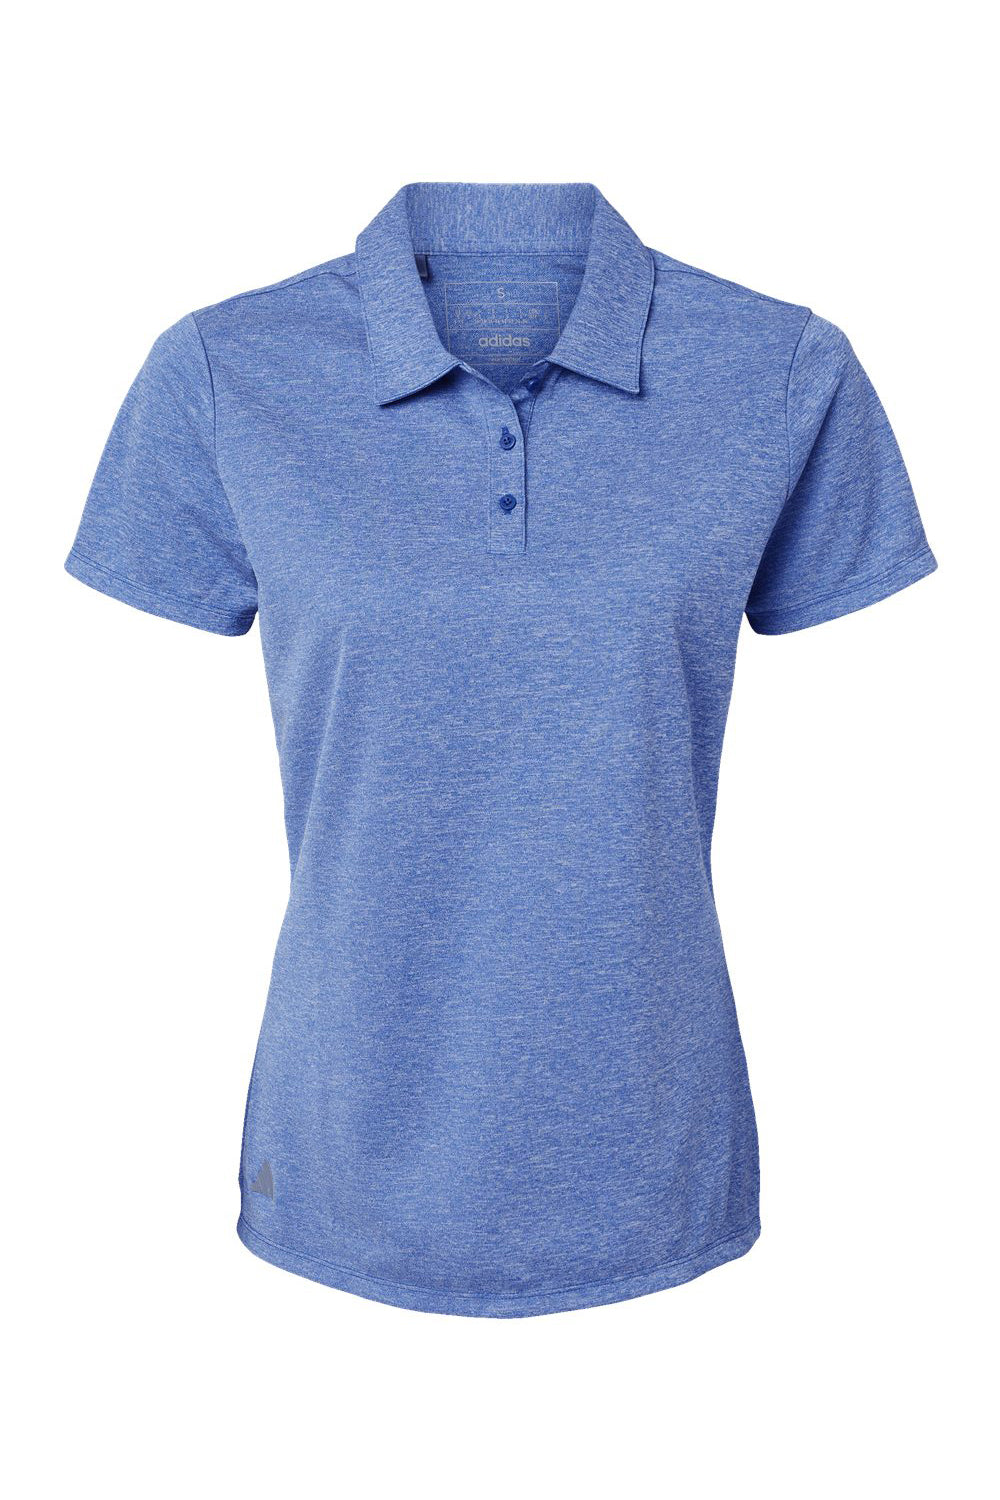 Adidas A583 Womens Heathered Short Sleeve Polo Shirt Collegiate Royal Blue Melange Flat Front